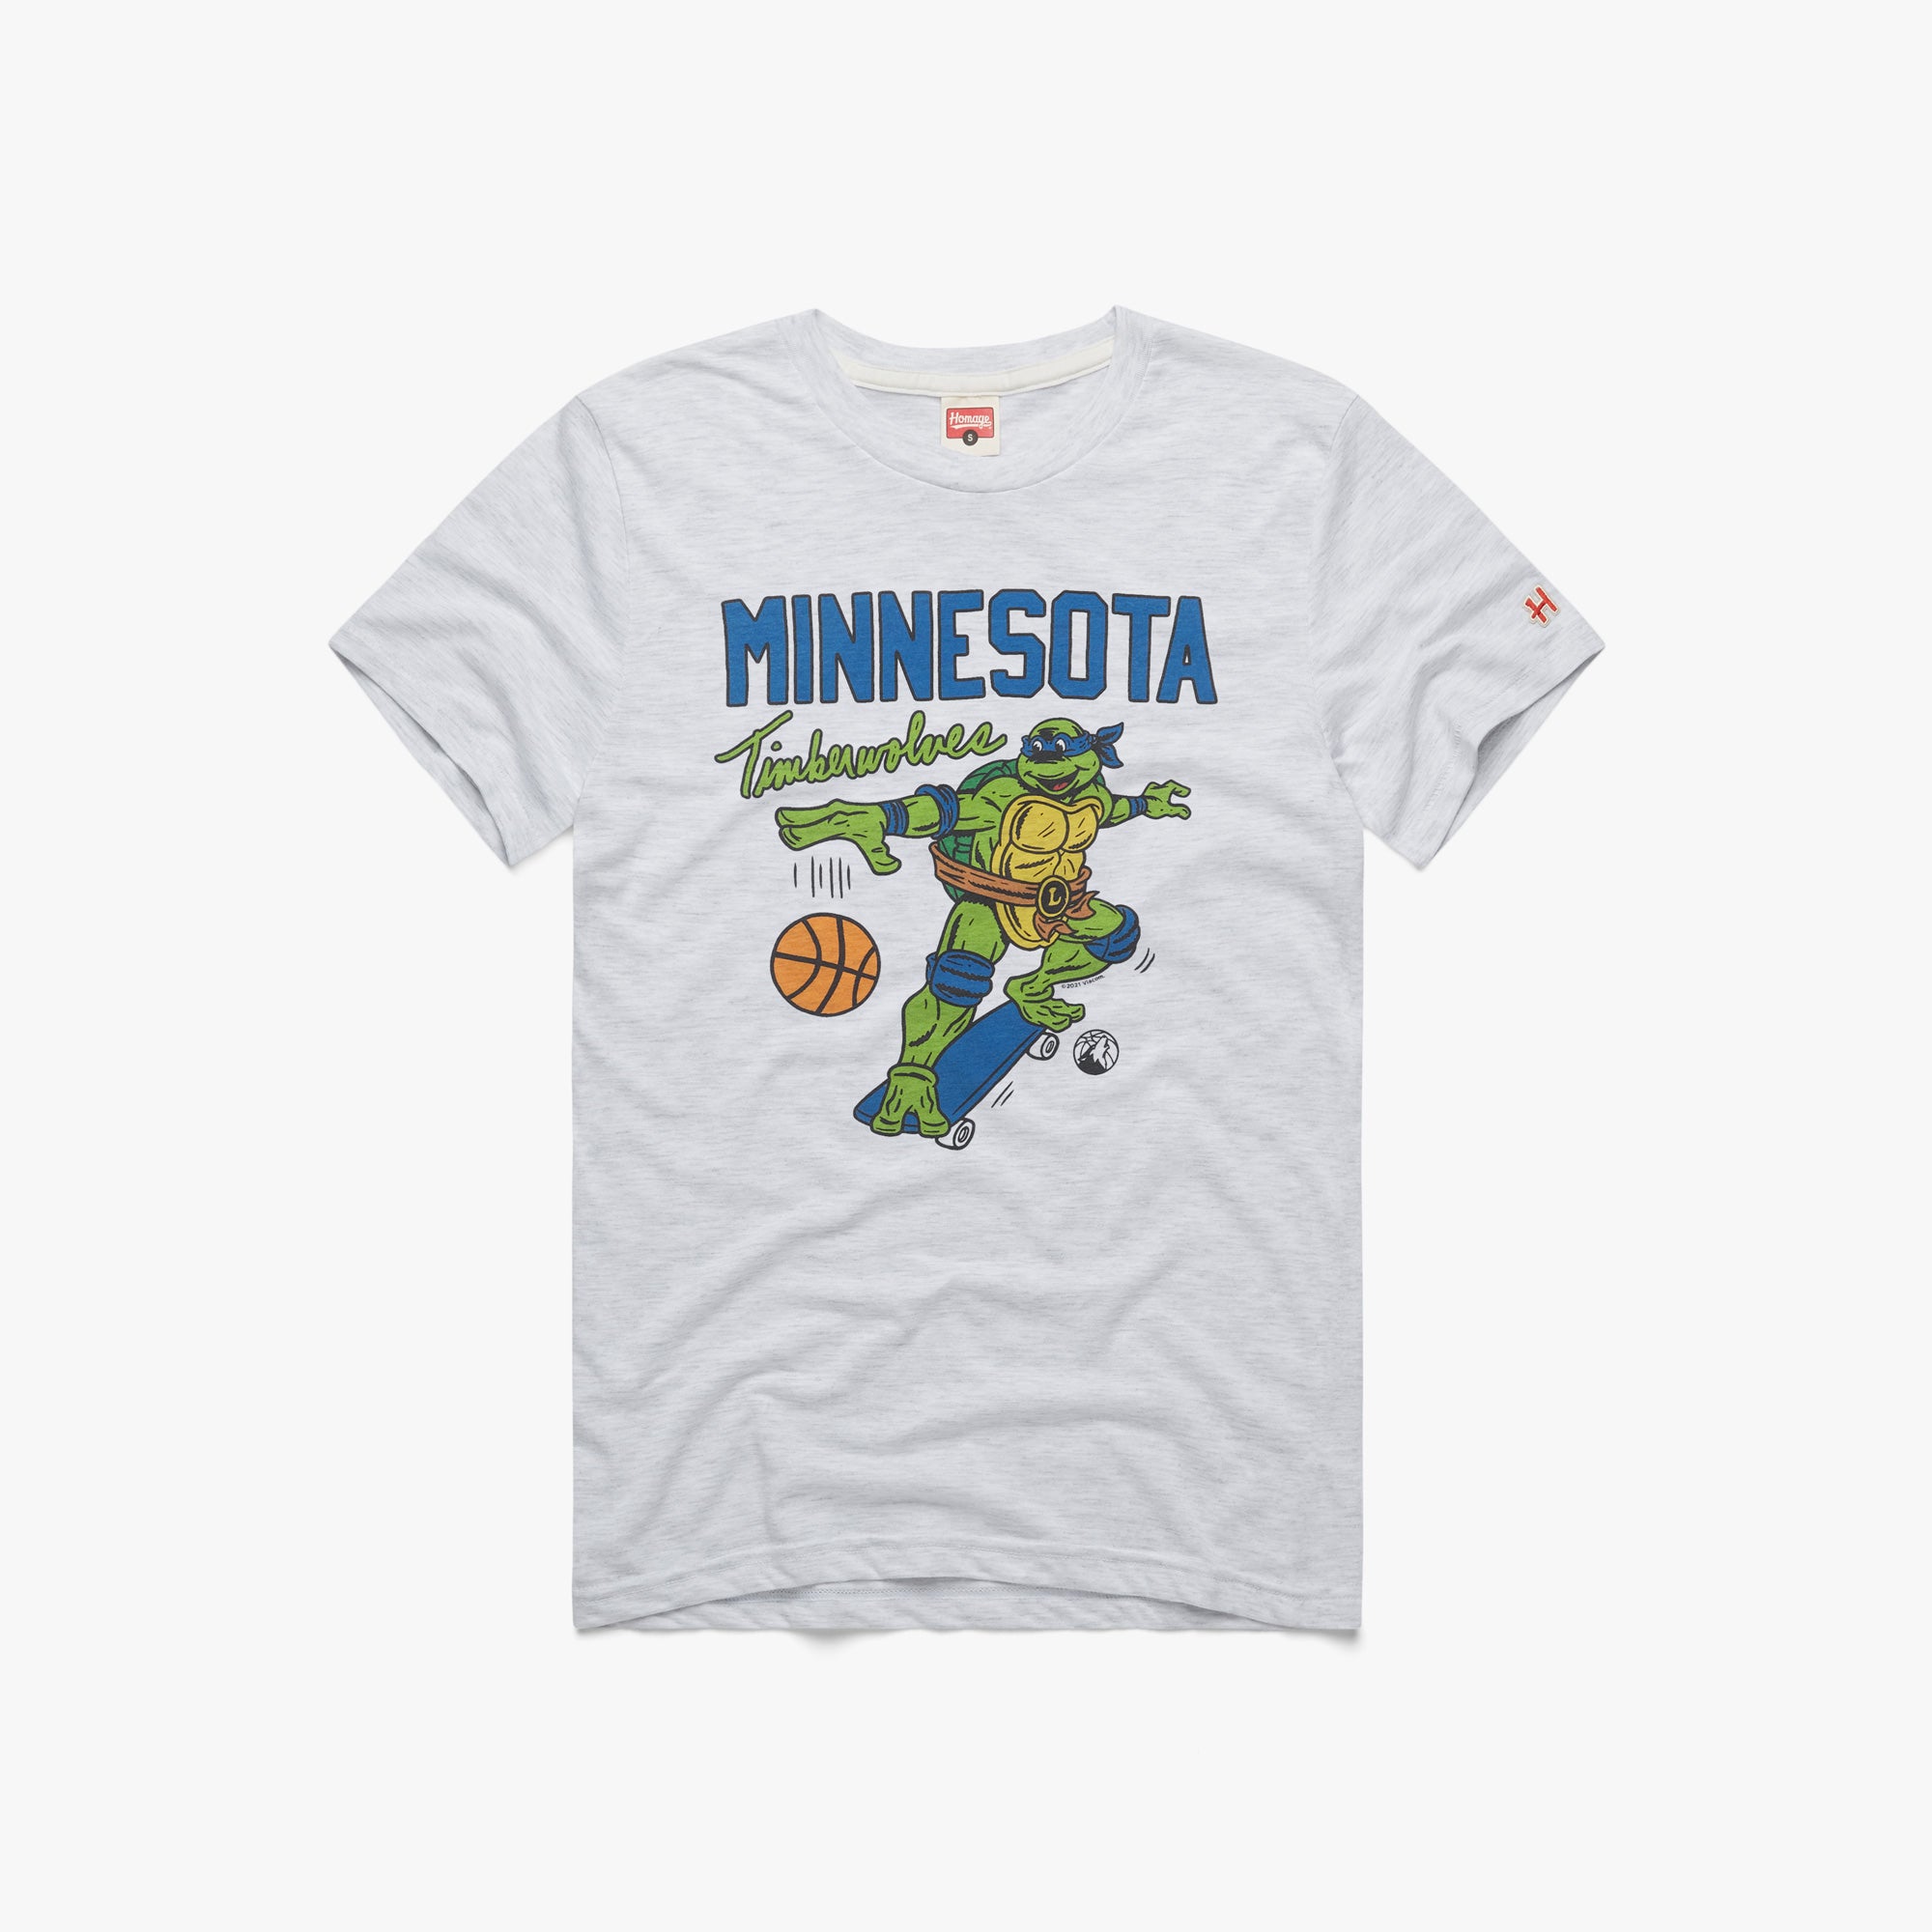 Minnesota Timberwolves Jersey For Babies, Youth, Women, or Men